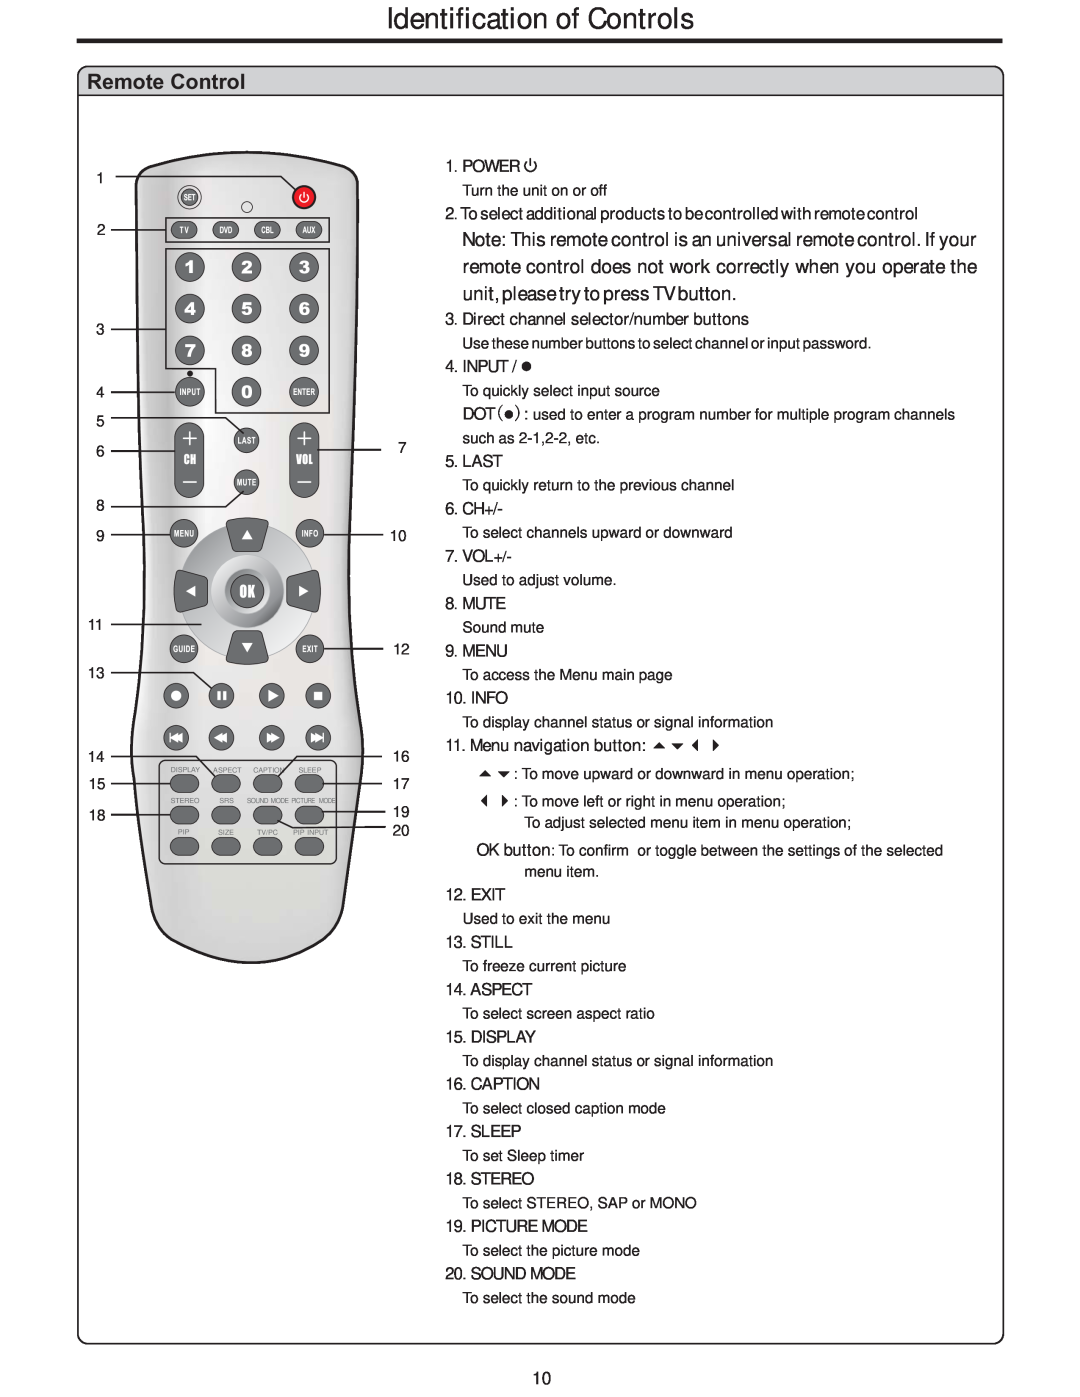 Polaroid PLA-4248 manual Remote Control, Identification of Controls 